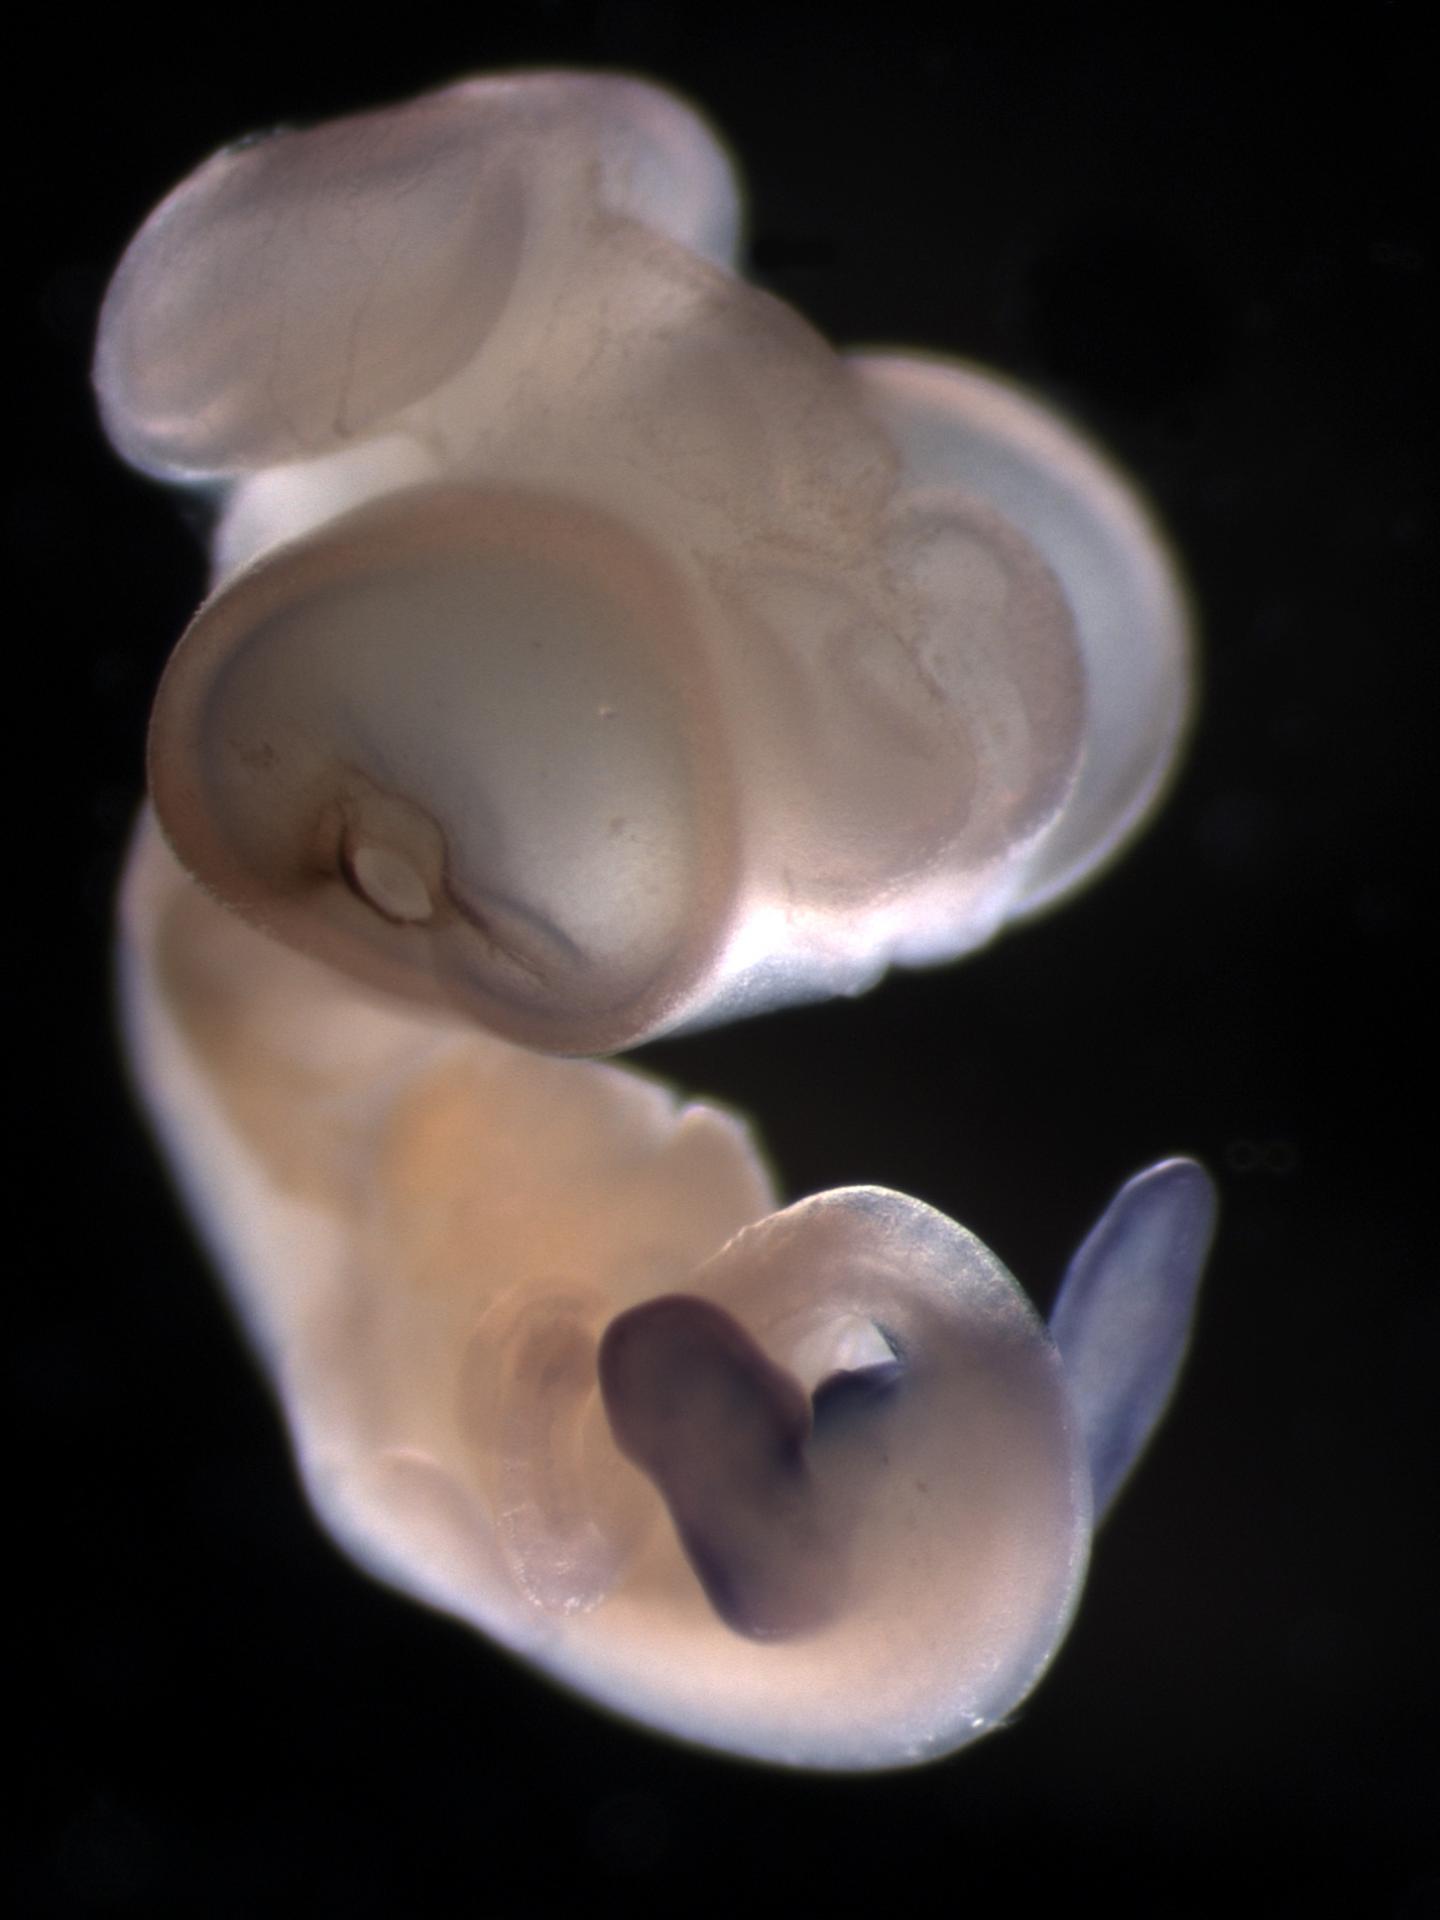 Anolis Lizard Embryo